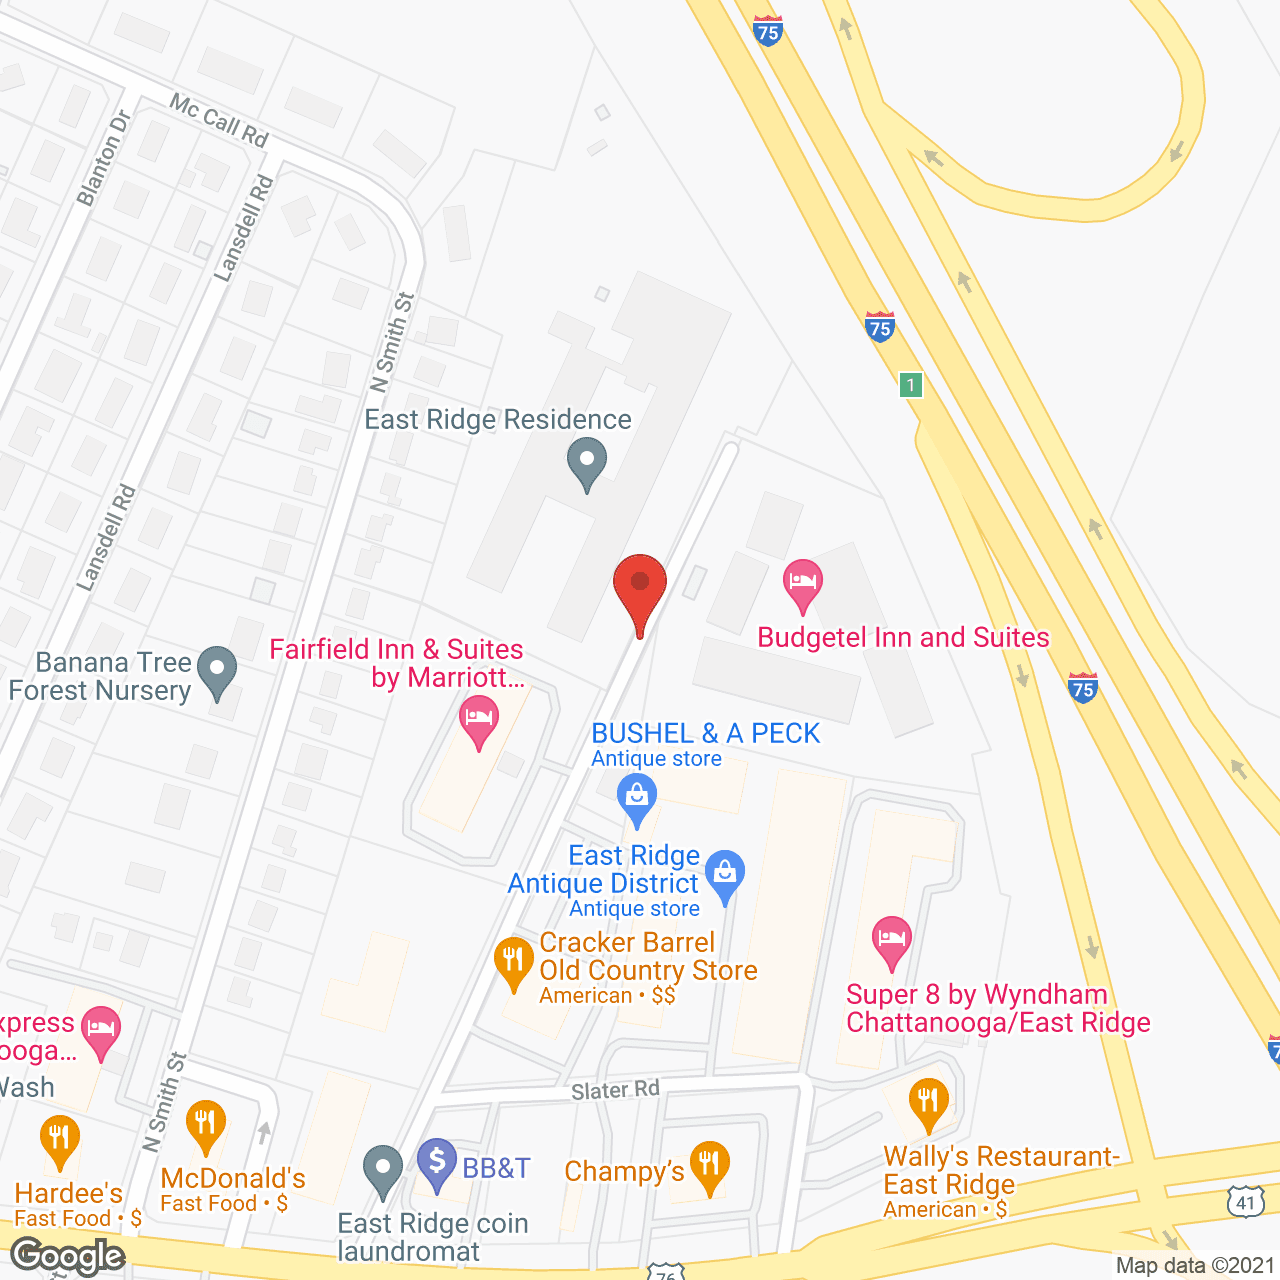 East Ridge Residence in google map